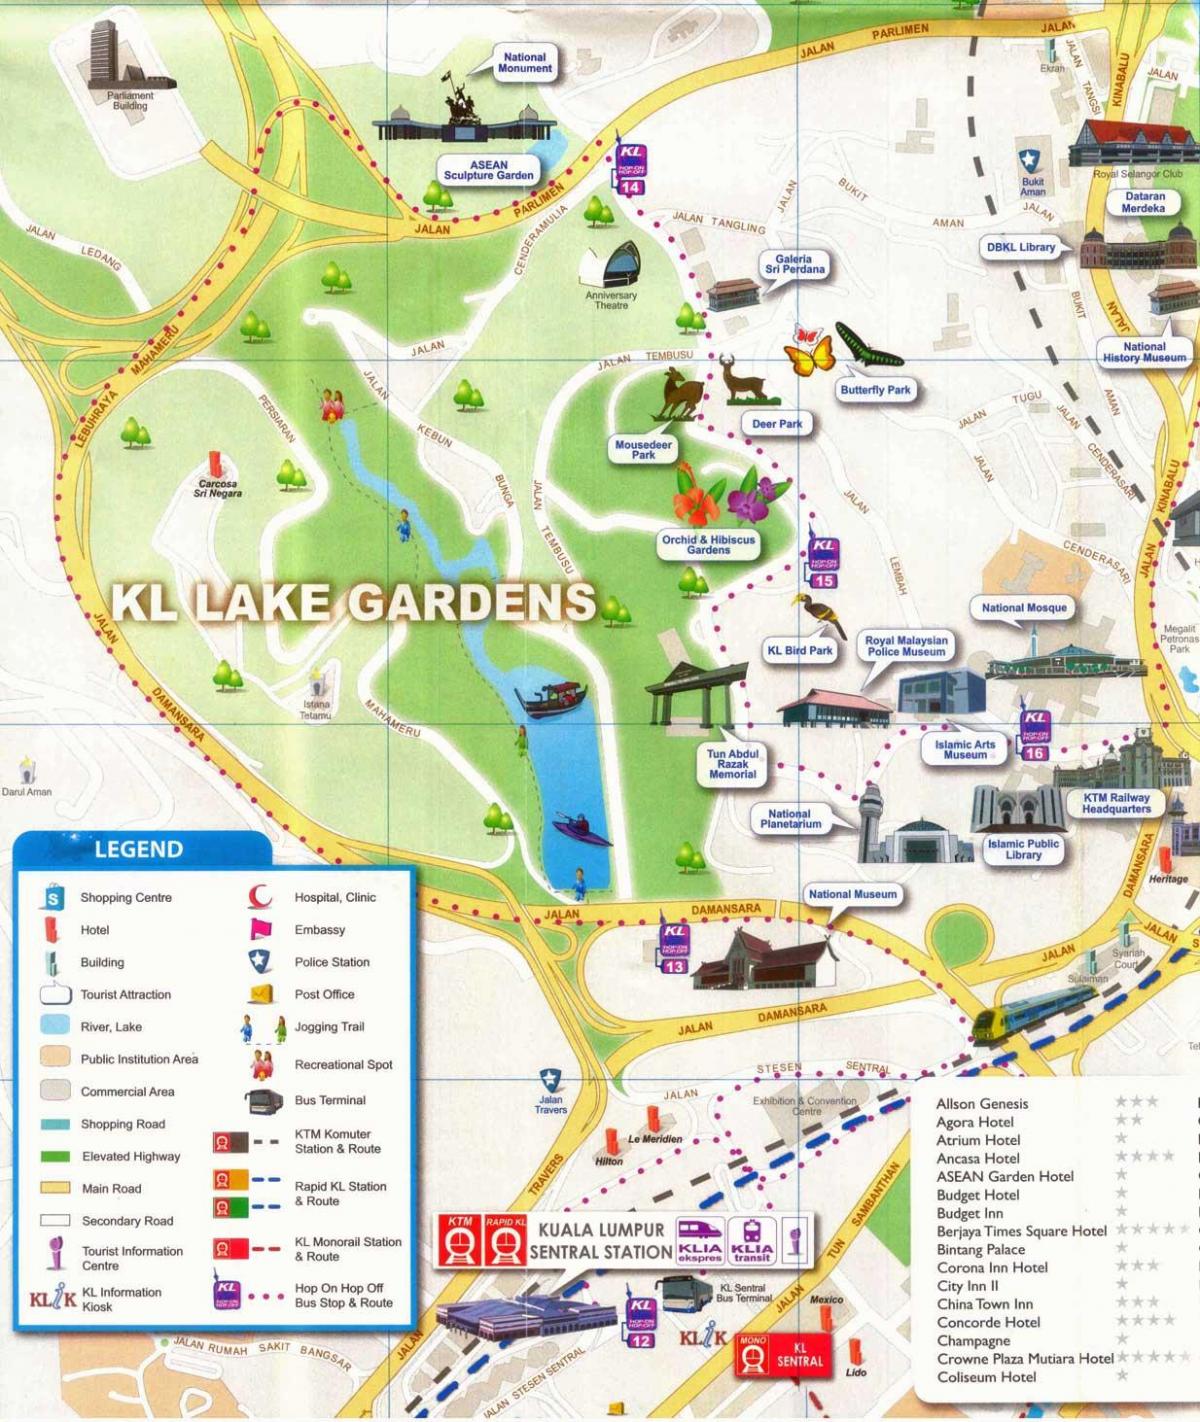 Bản đồ của cái hồ vườn